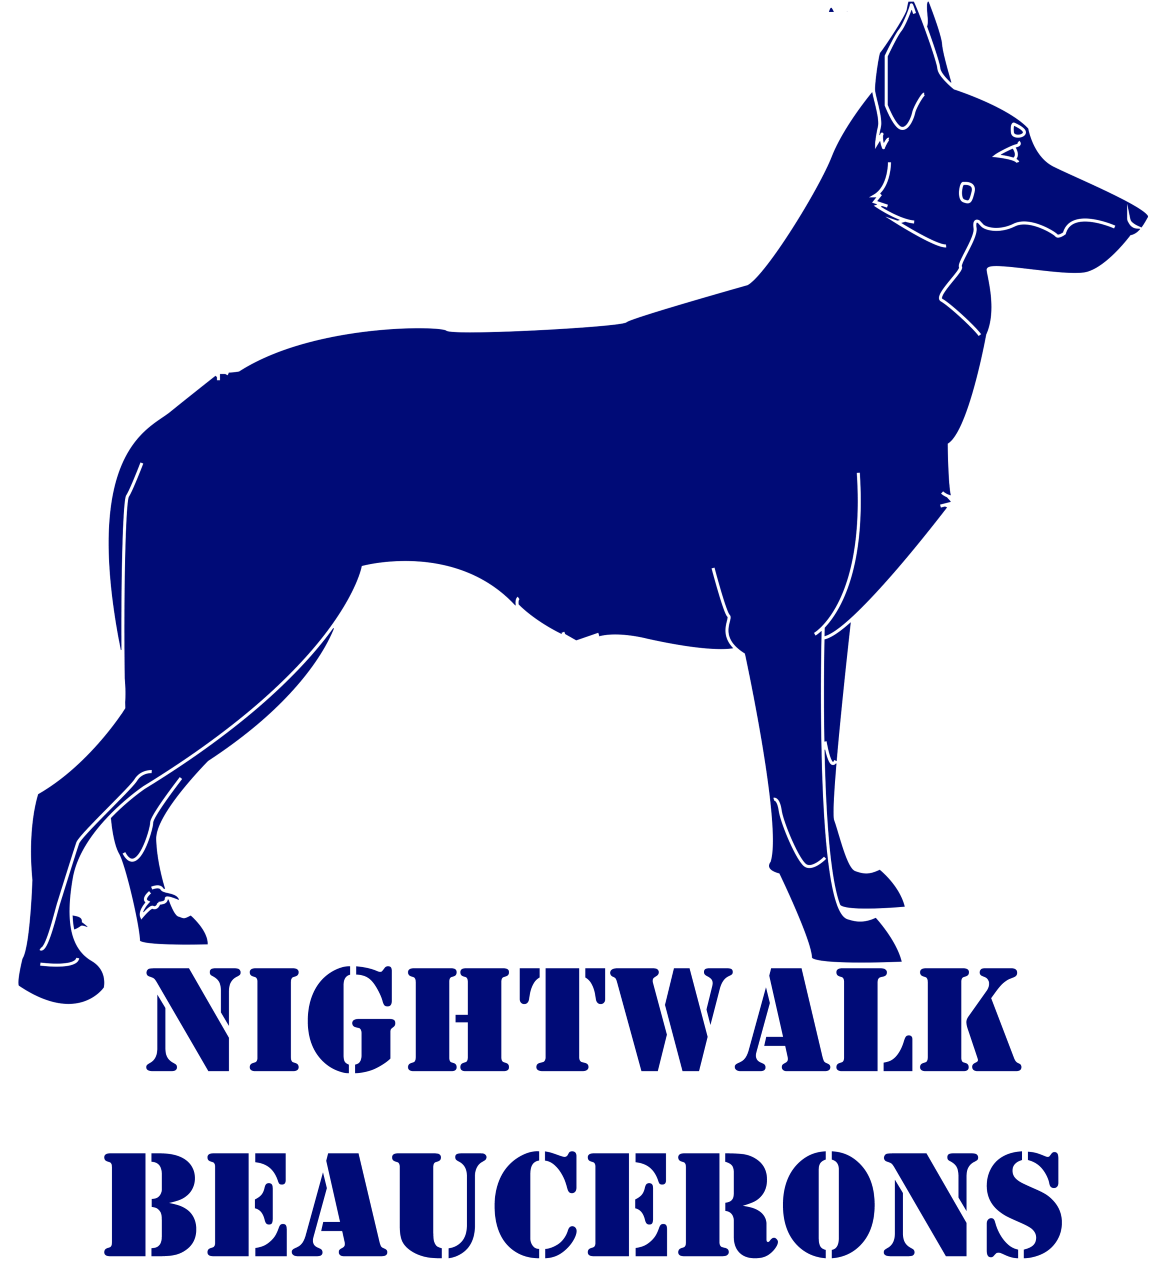 Nightwalk Beaucerons